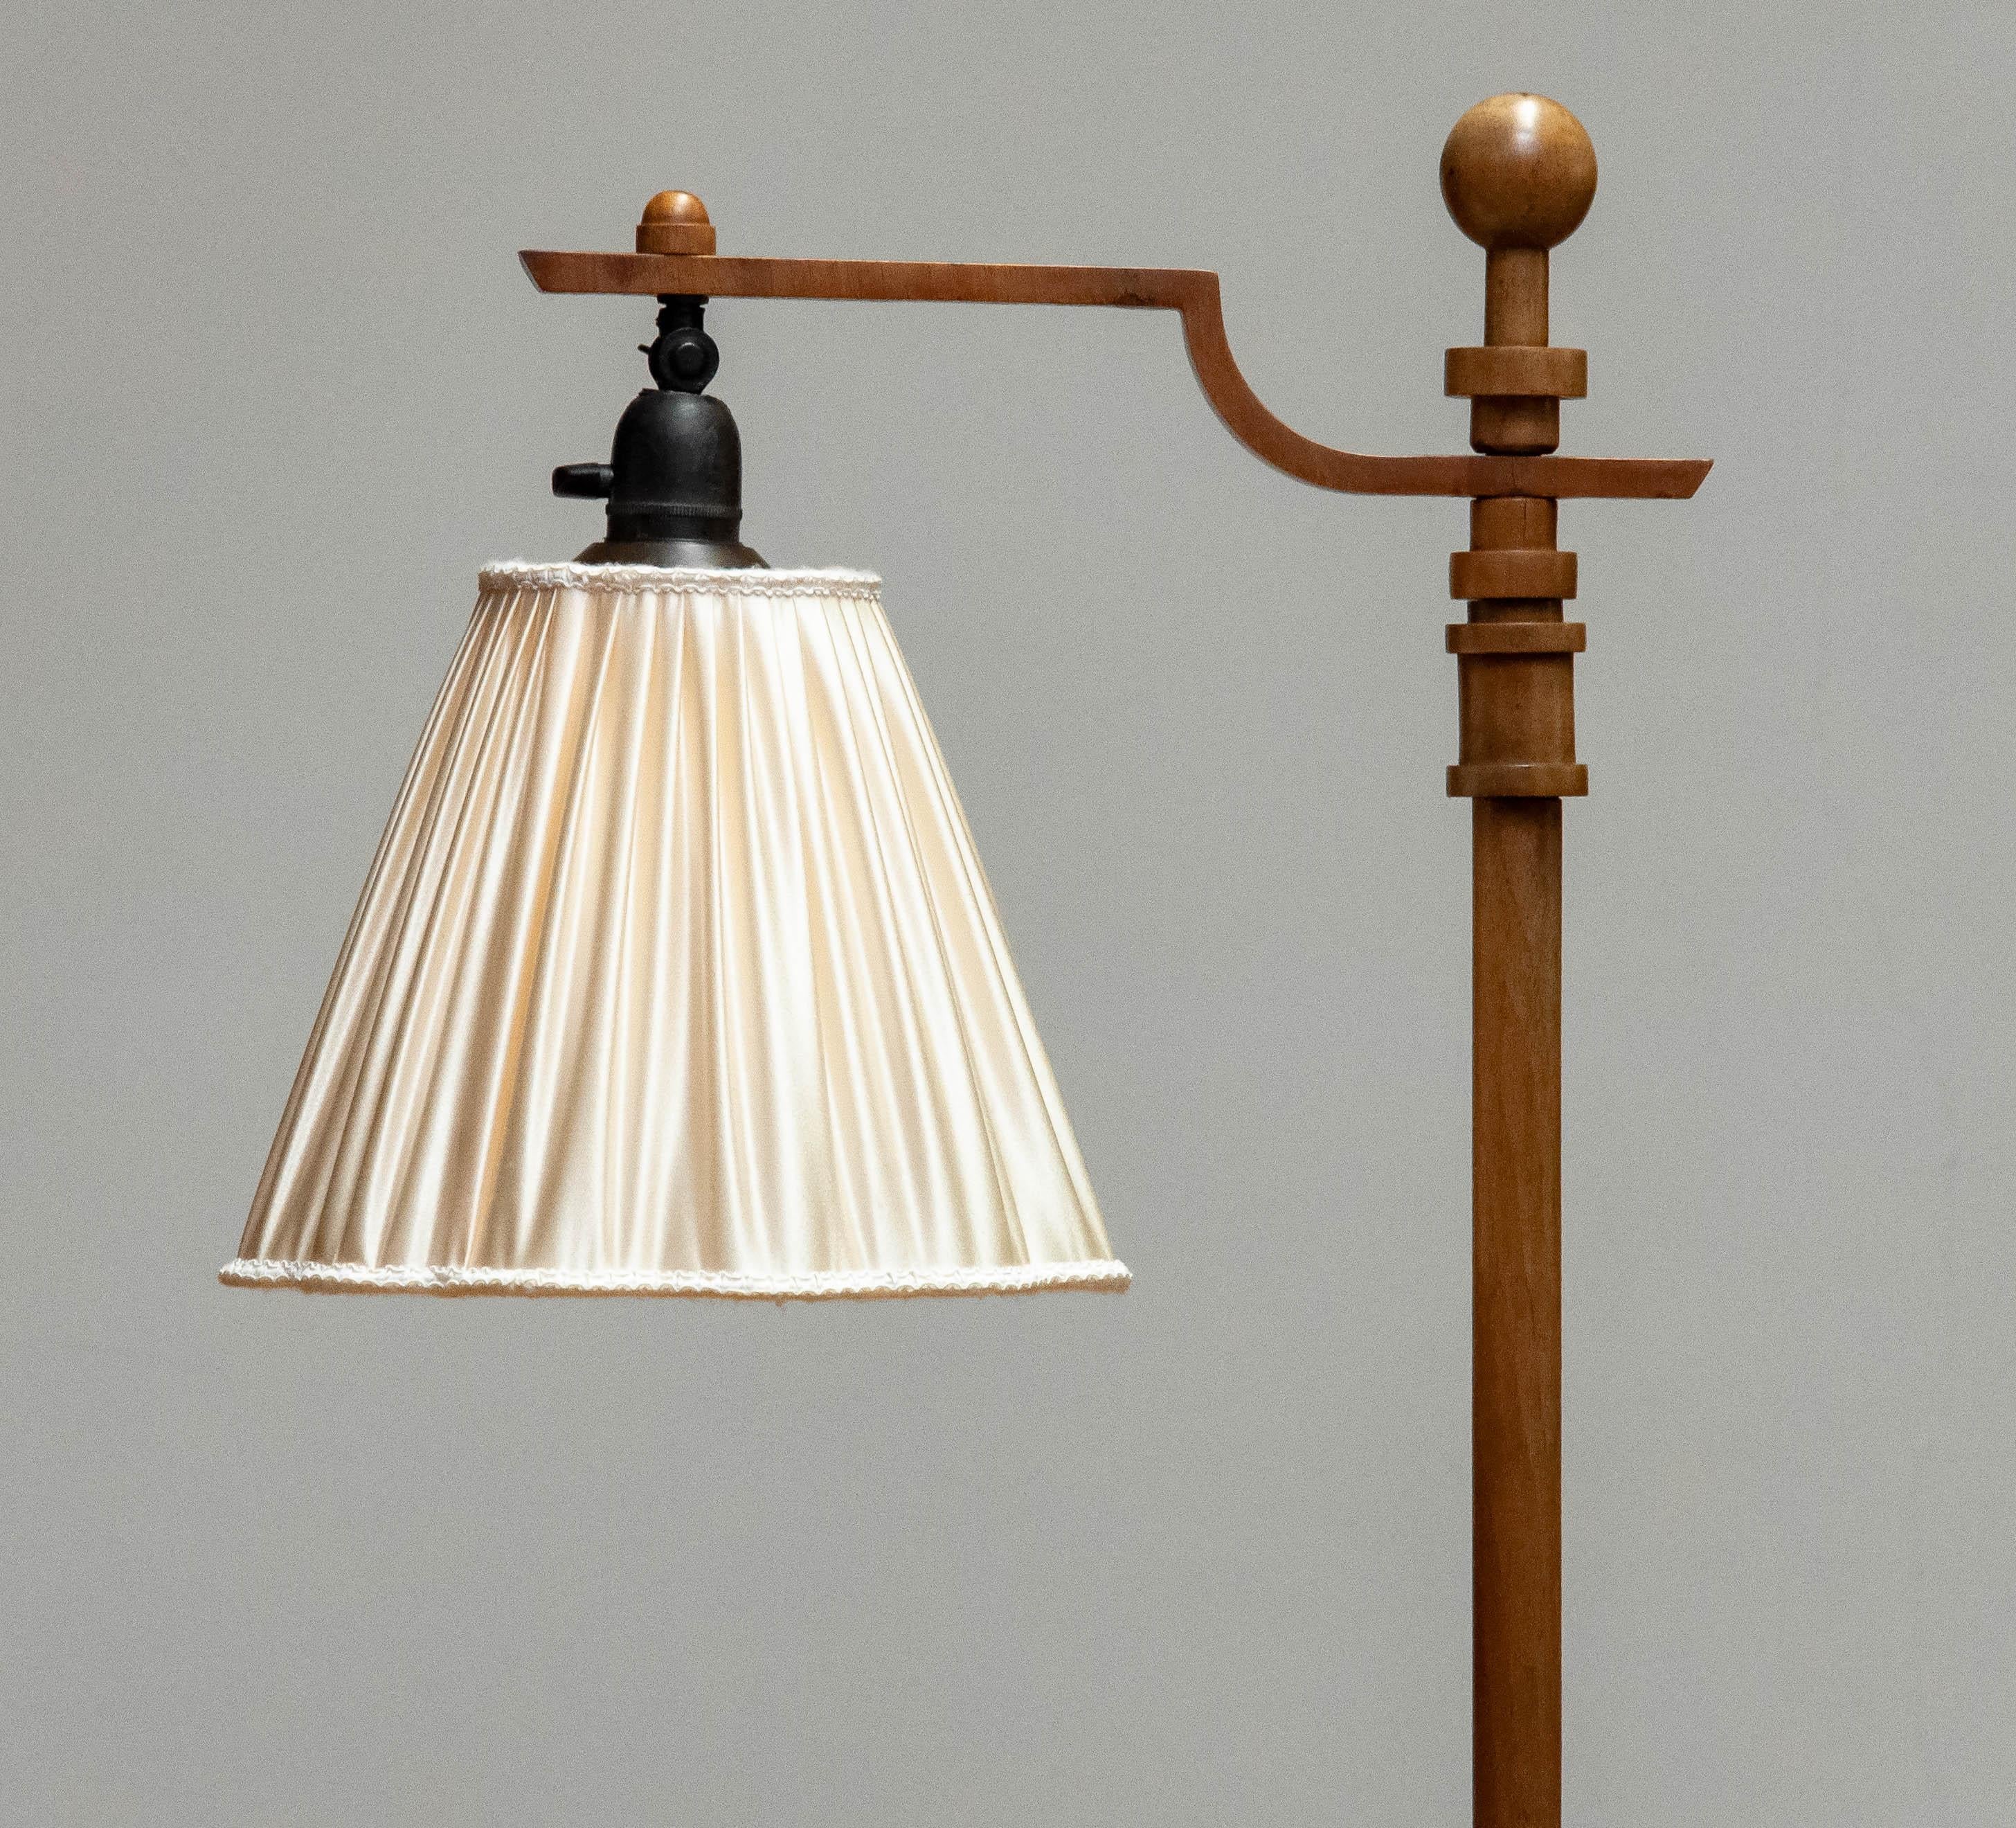 1930 Swedish Designer Art Deco Wooden Floor Lamp In Walnut With Silk Satin Shade For Sale 4